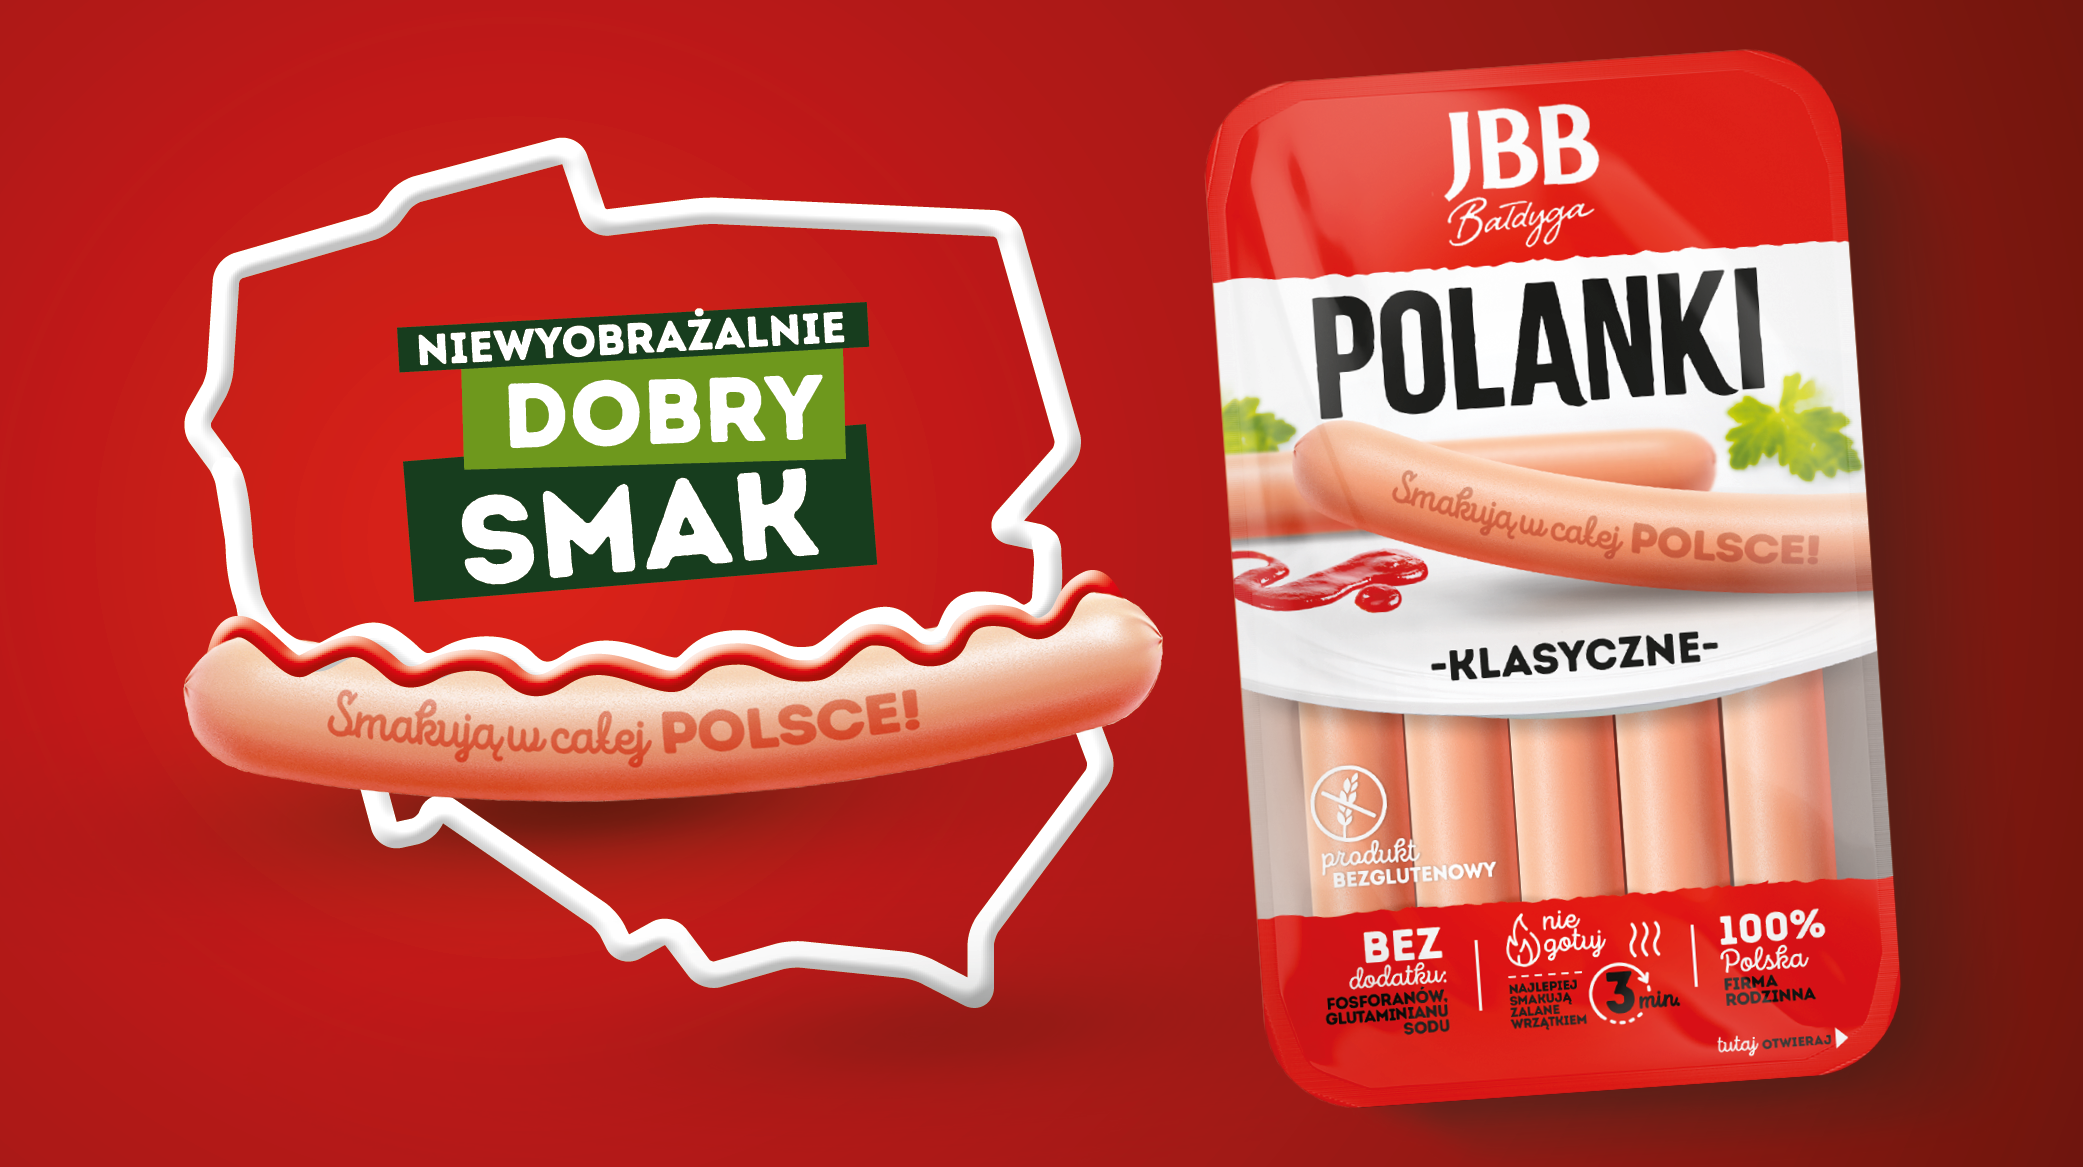 JBB rusza z kampanią digital dla Polanek